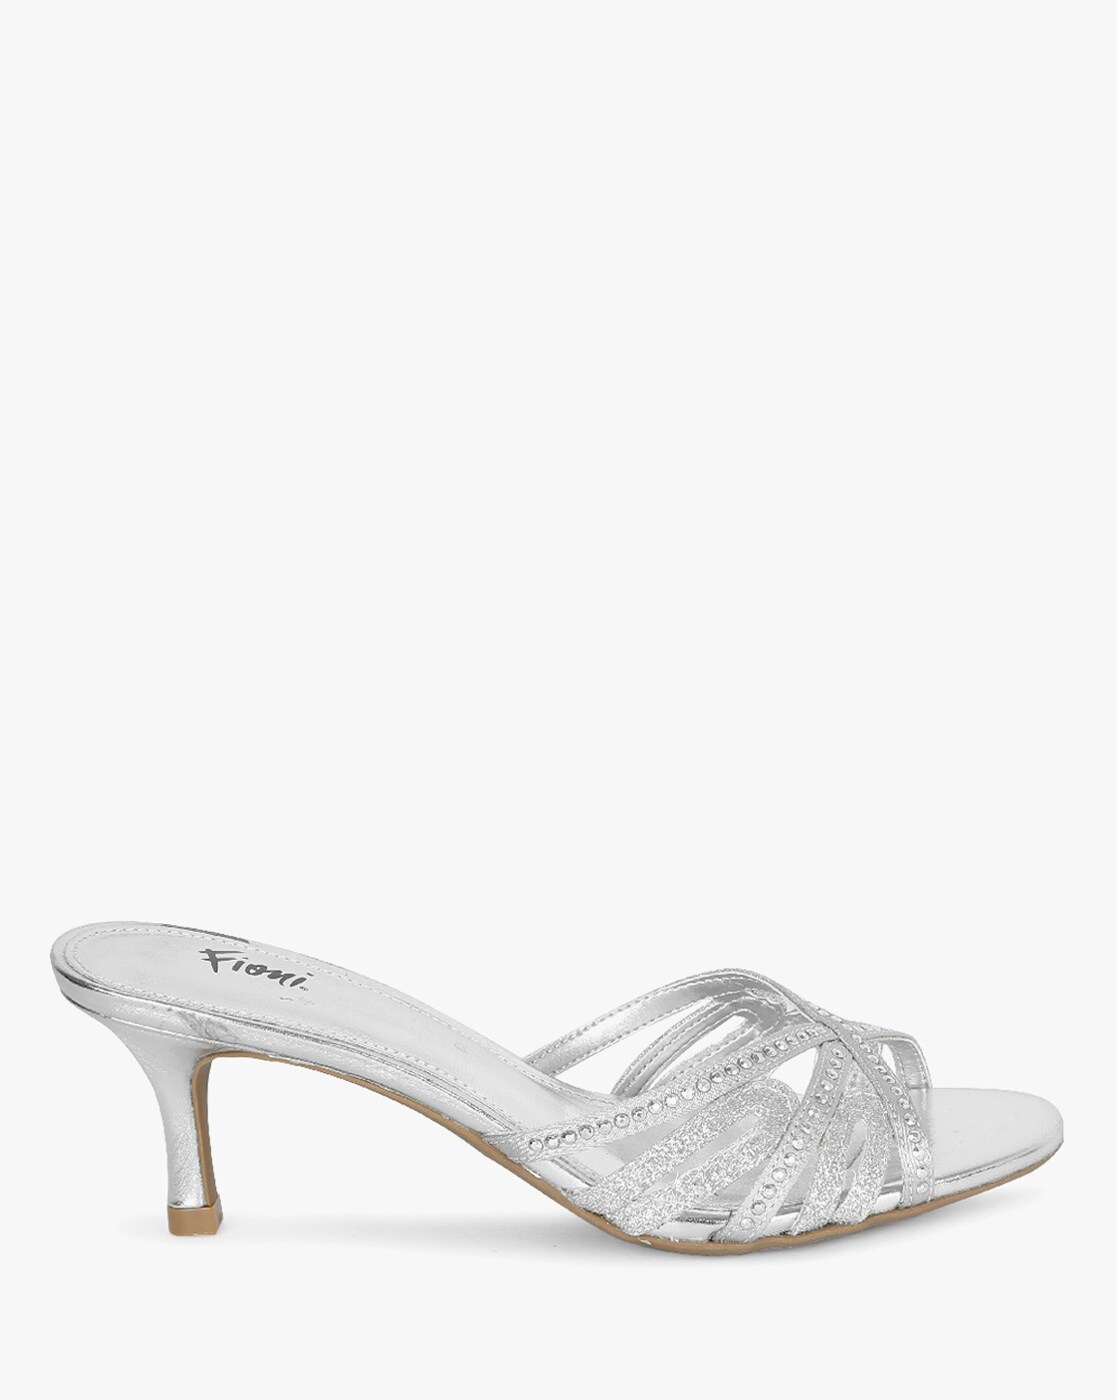 Buy Silver Flip Flop \u0026 Slippers for 